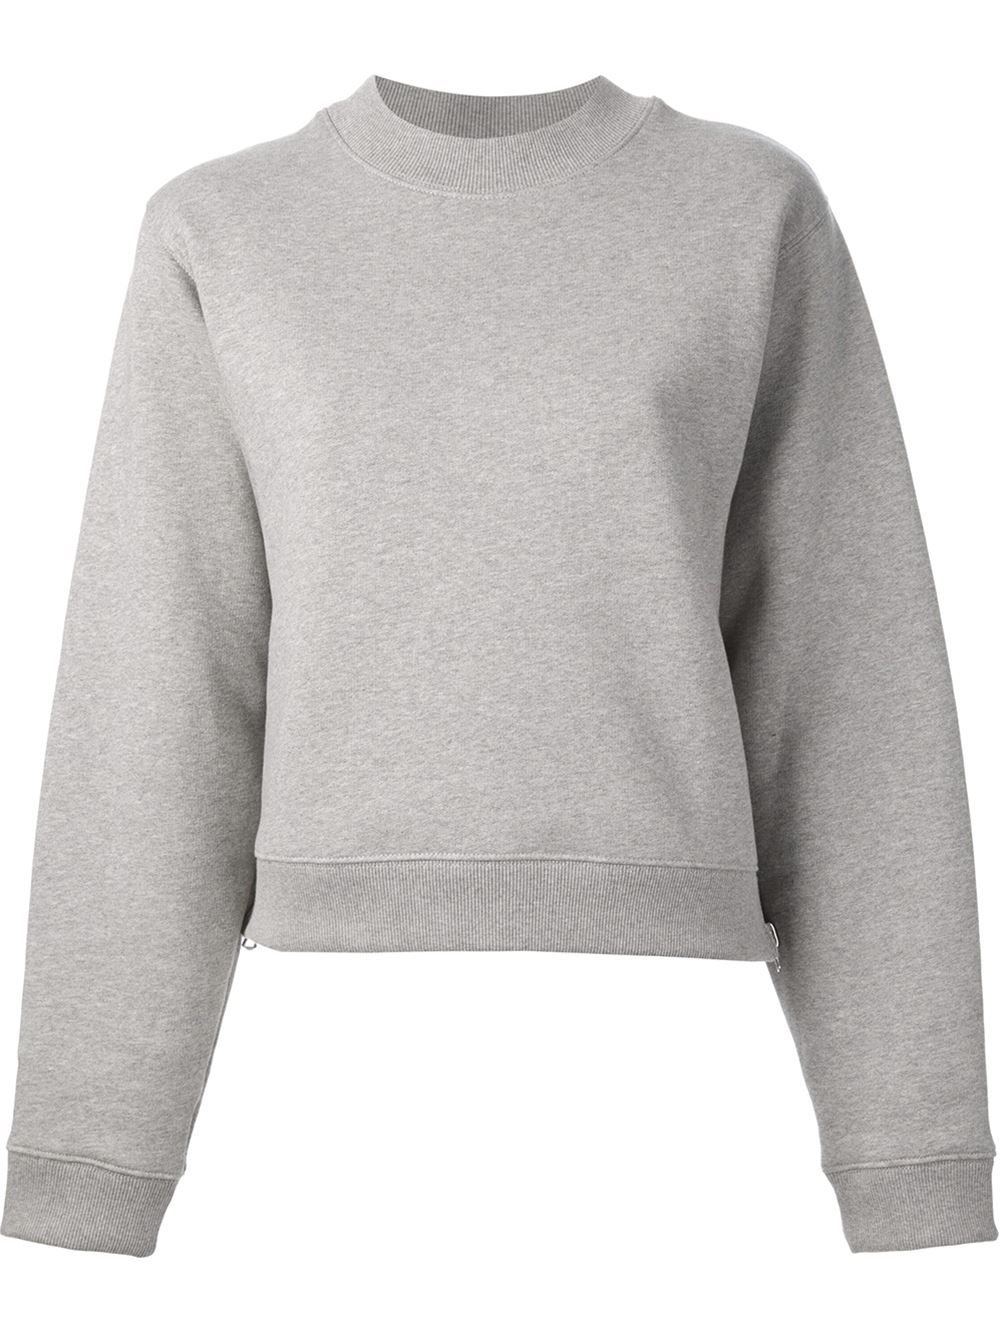 Acne Studios Side Zip Detail Sweatshirt in Grey (Gray) - Lyst